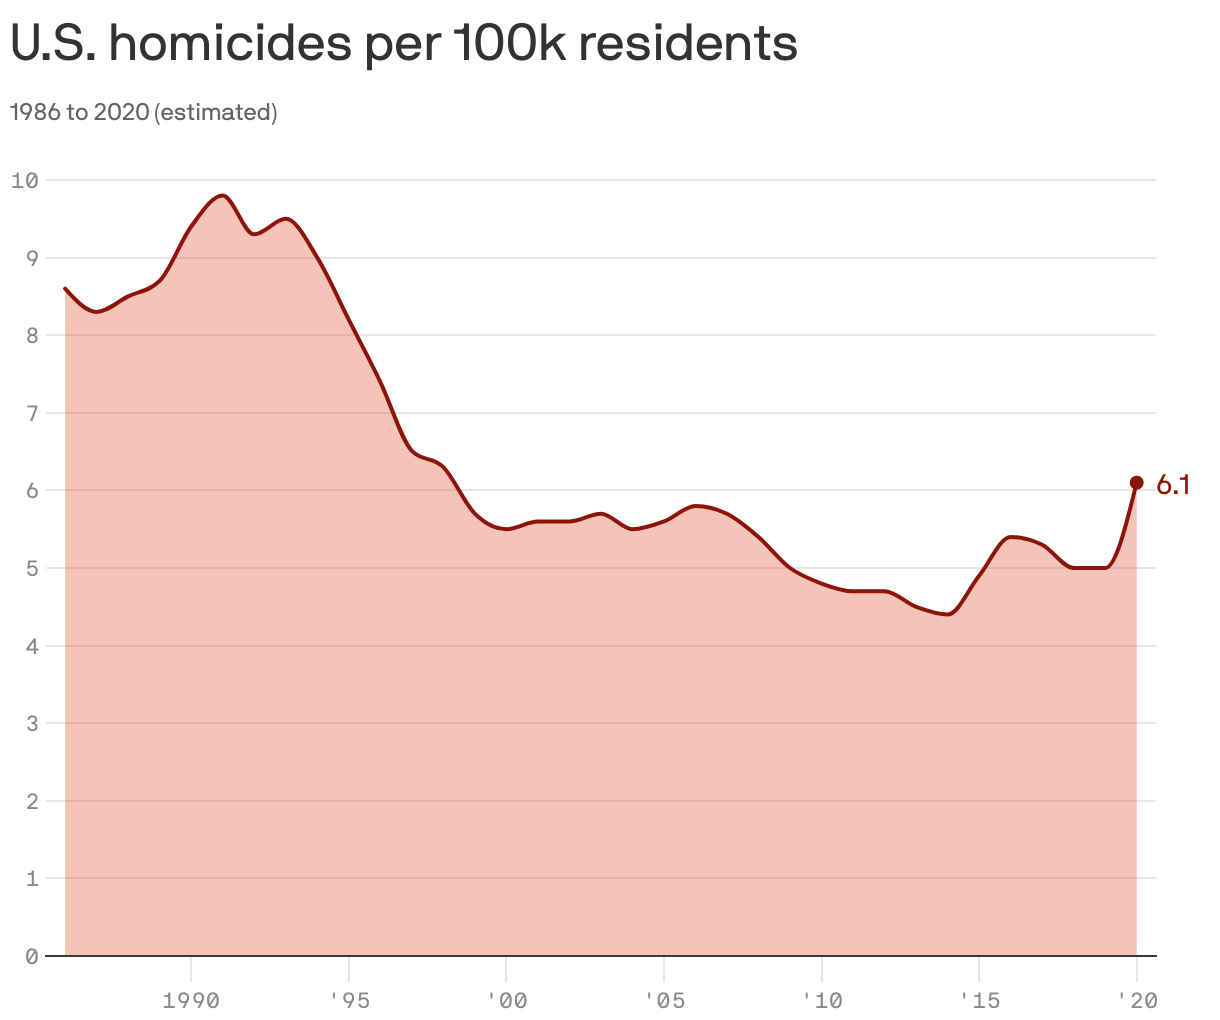 U.S. homicides per 100k residents